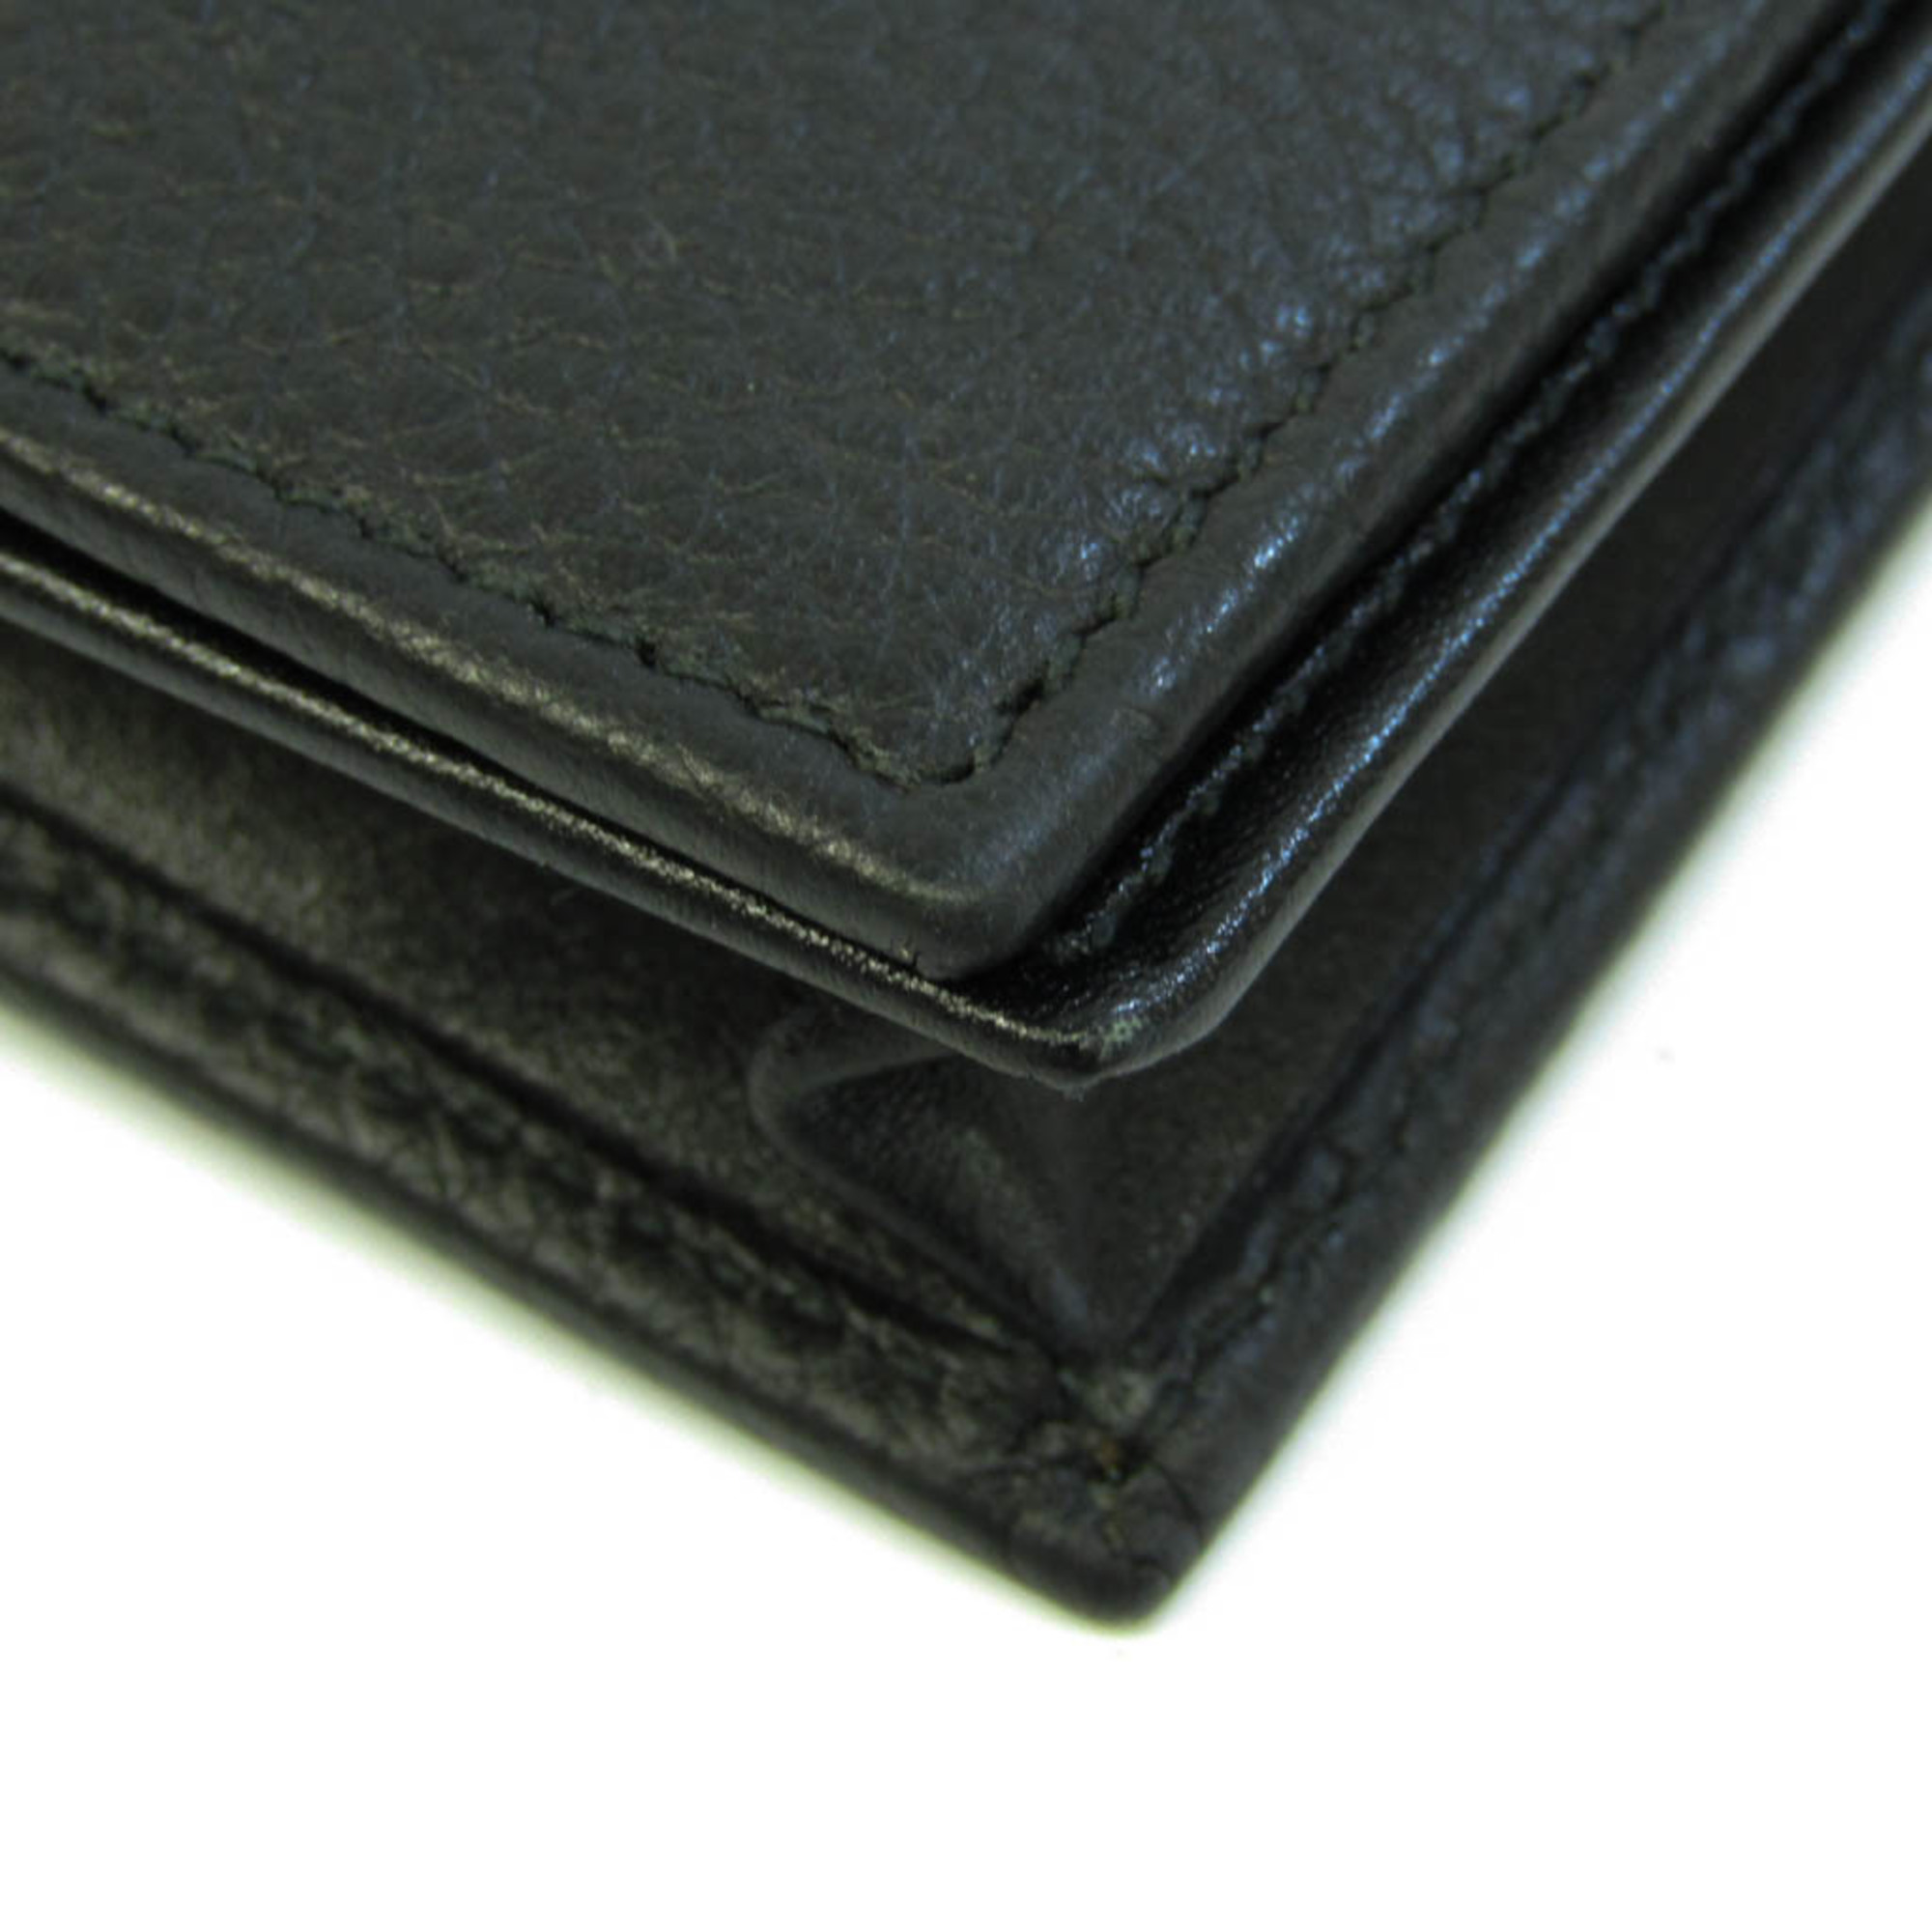 Bvlgari 36966 Men's Leather Long Wallet (bi-fold) Black